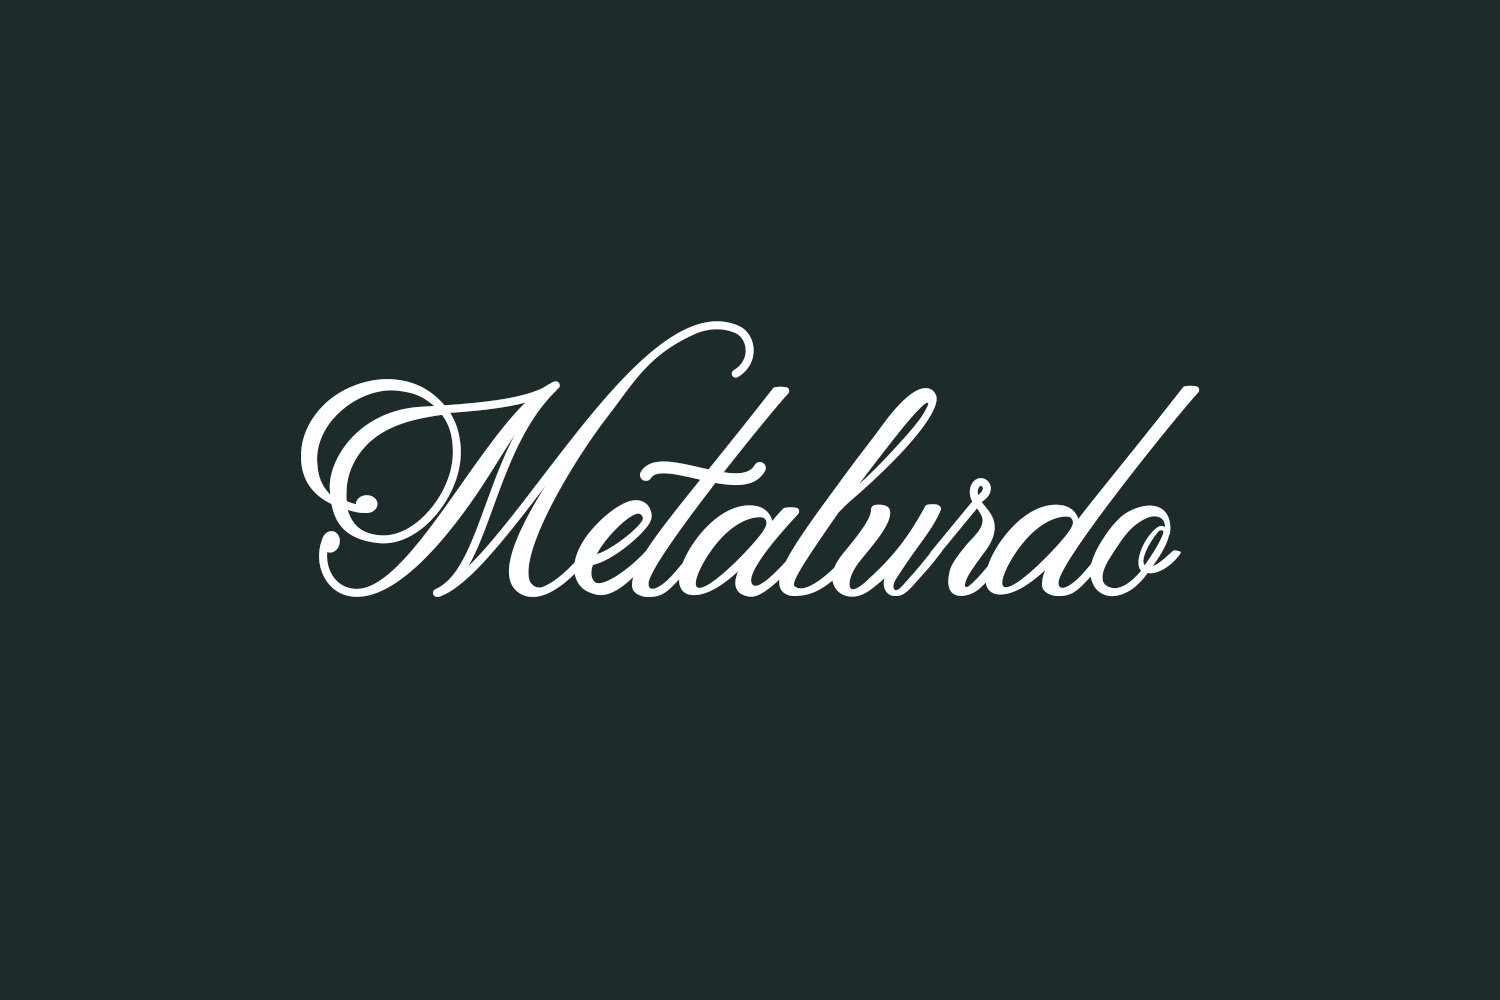 Metalurdo Free Font